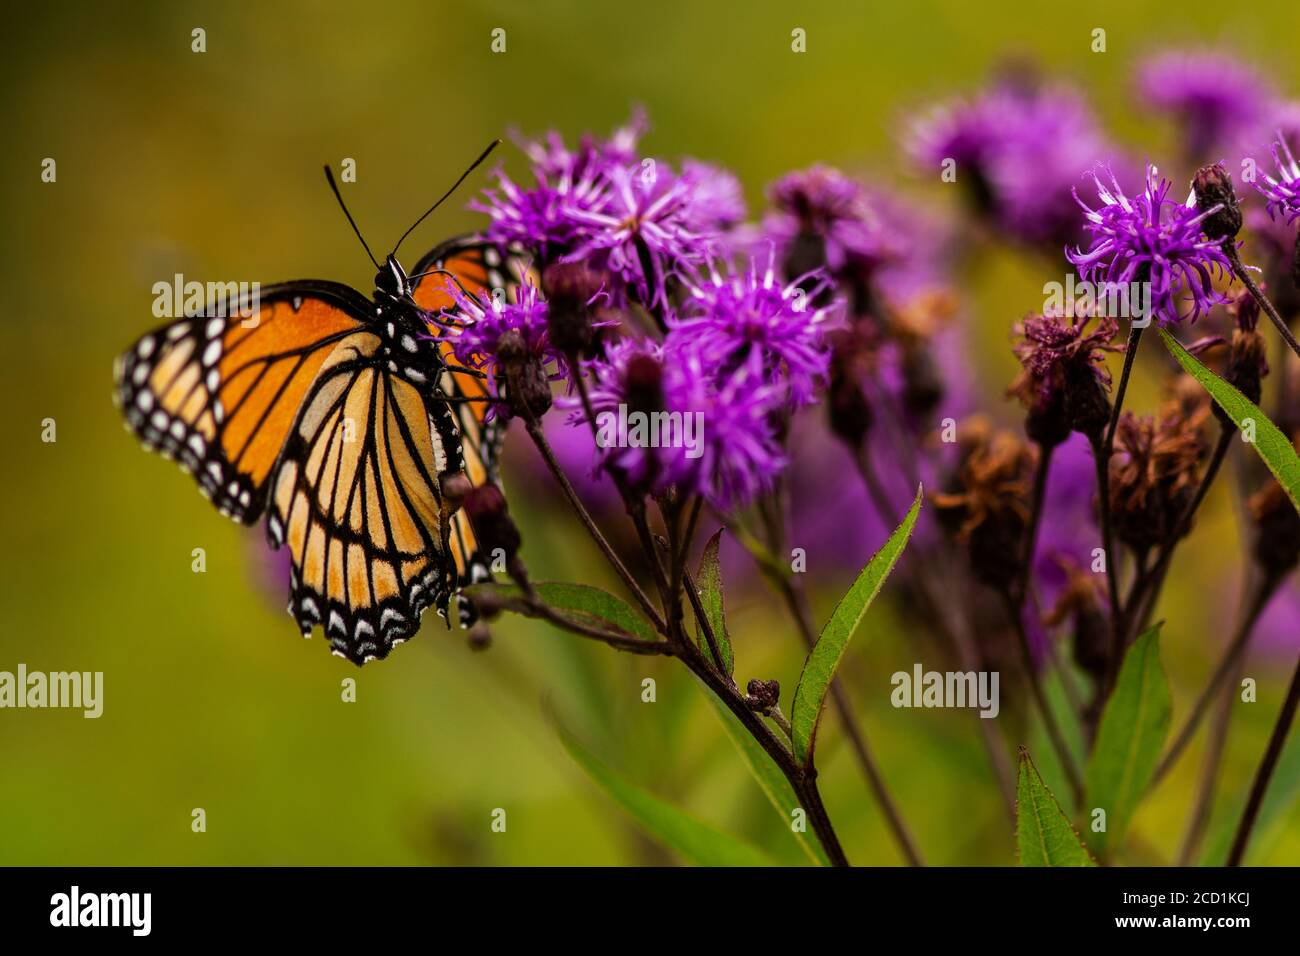 A Monarch Butterfly (Danaus plexippus) perched on a wild flower. Stock Photo